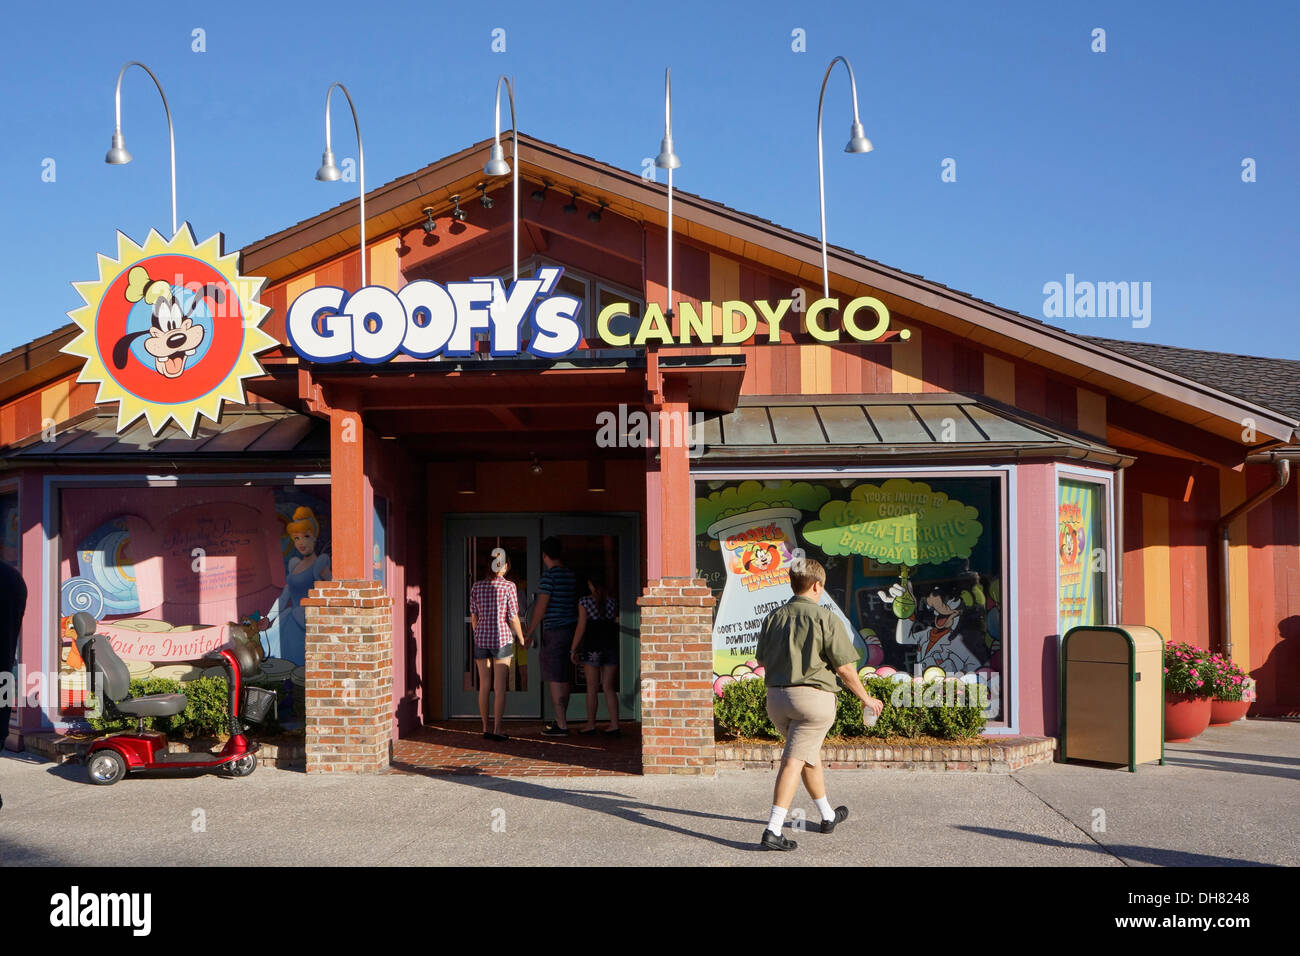 Goofy's Candy Co. Store Shop at Downtown Disney Market Place, Disney World Resort, Orlando Florida Stock Photo